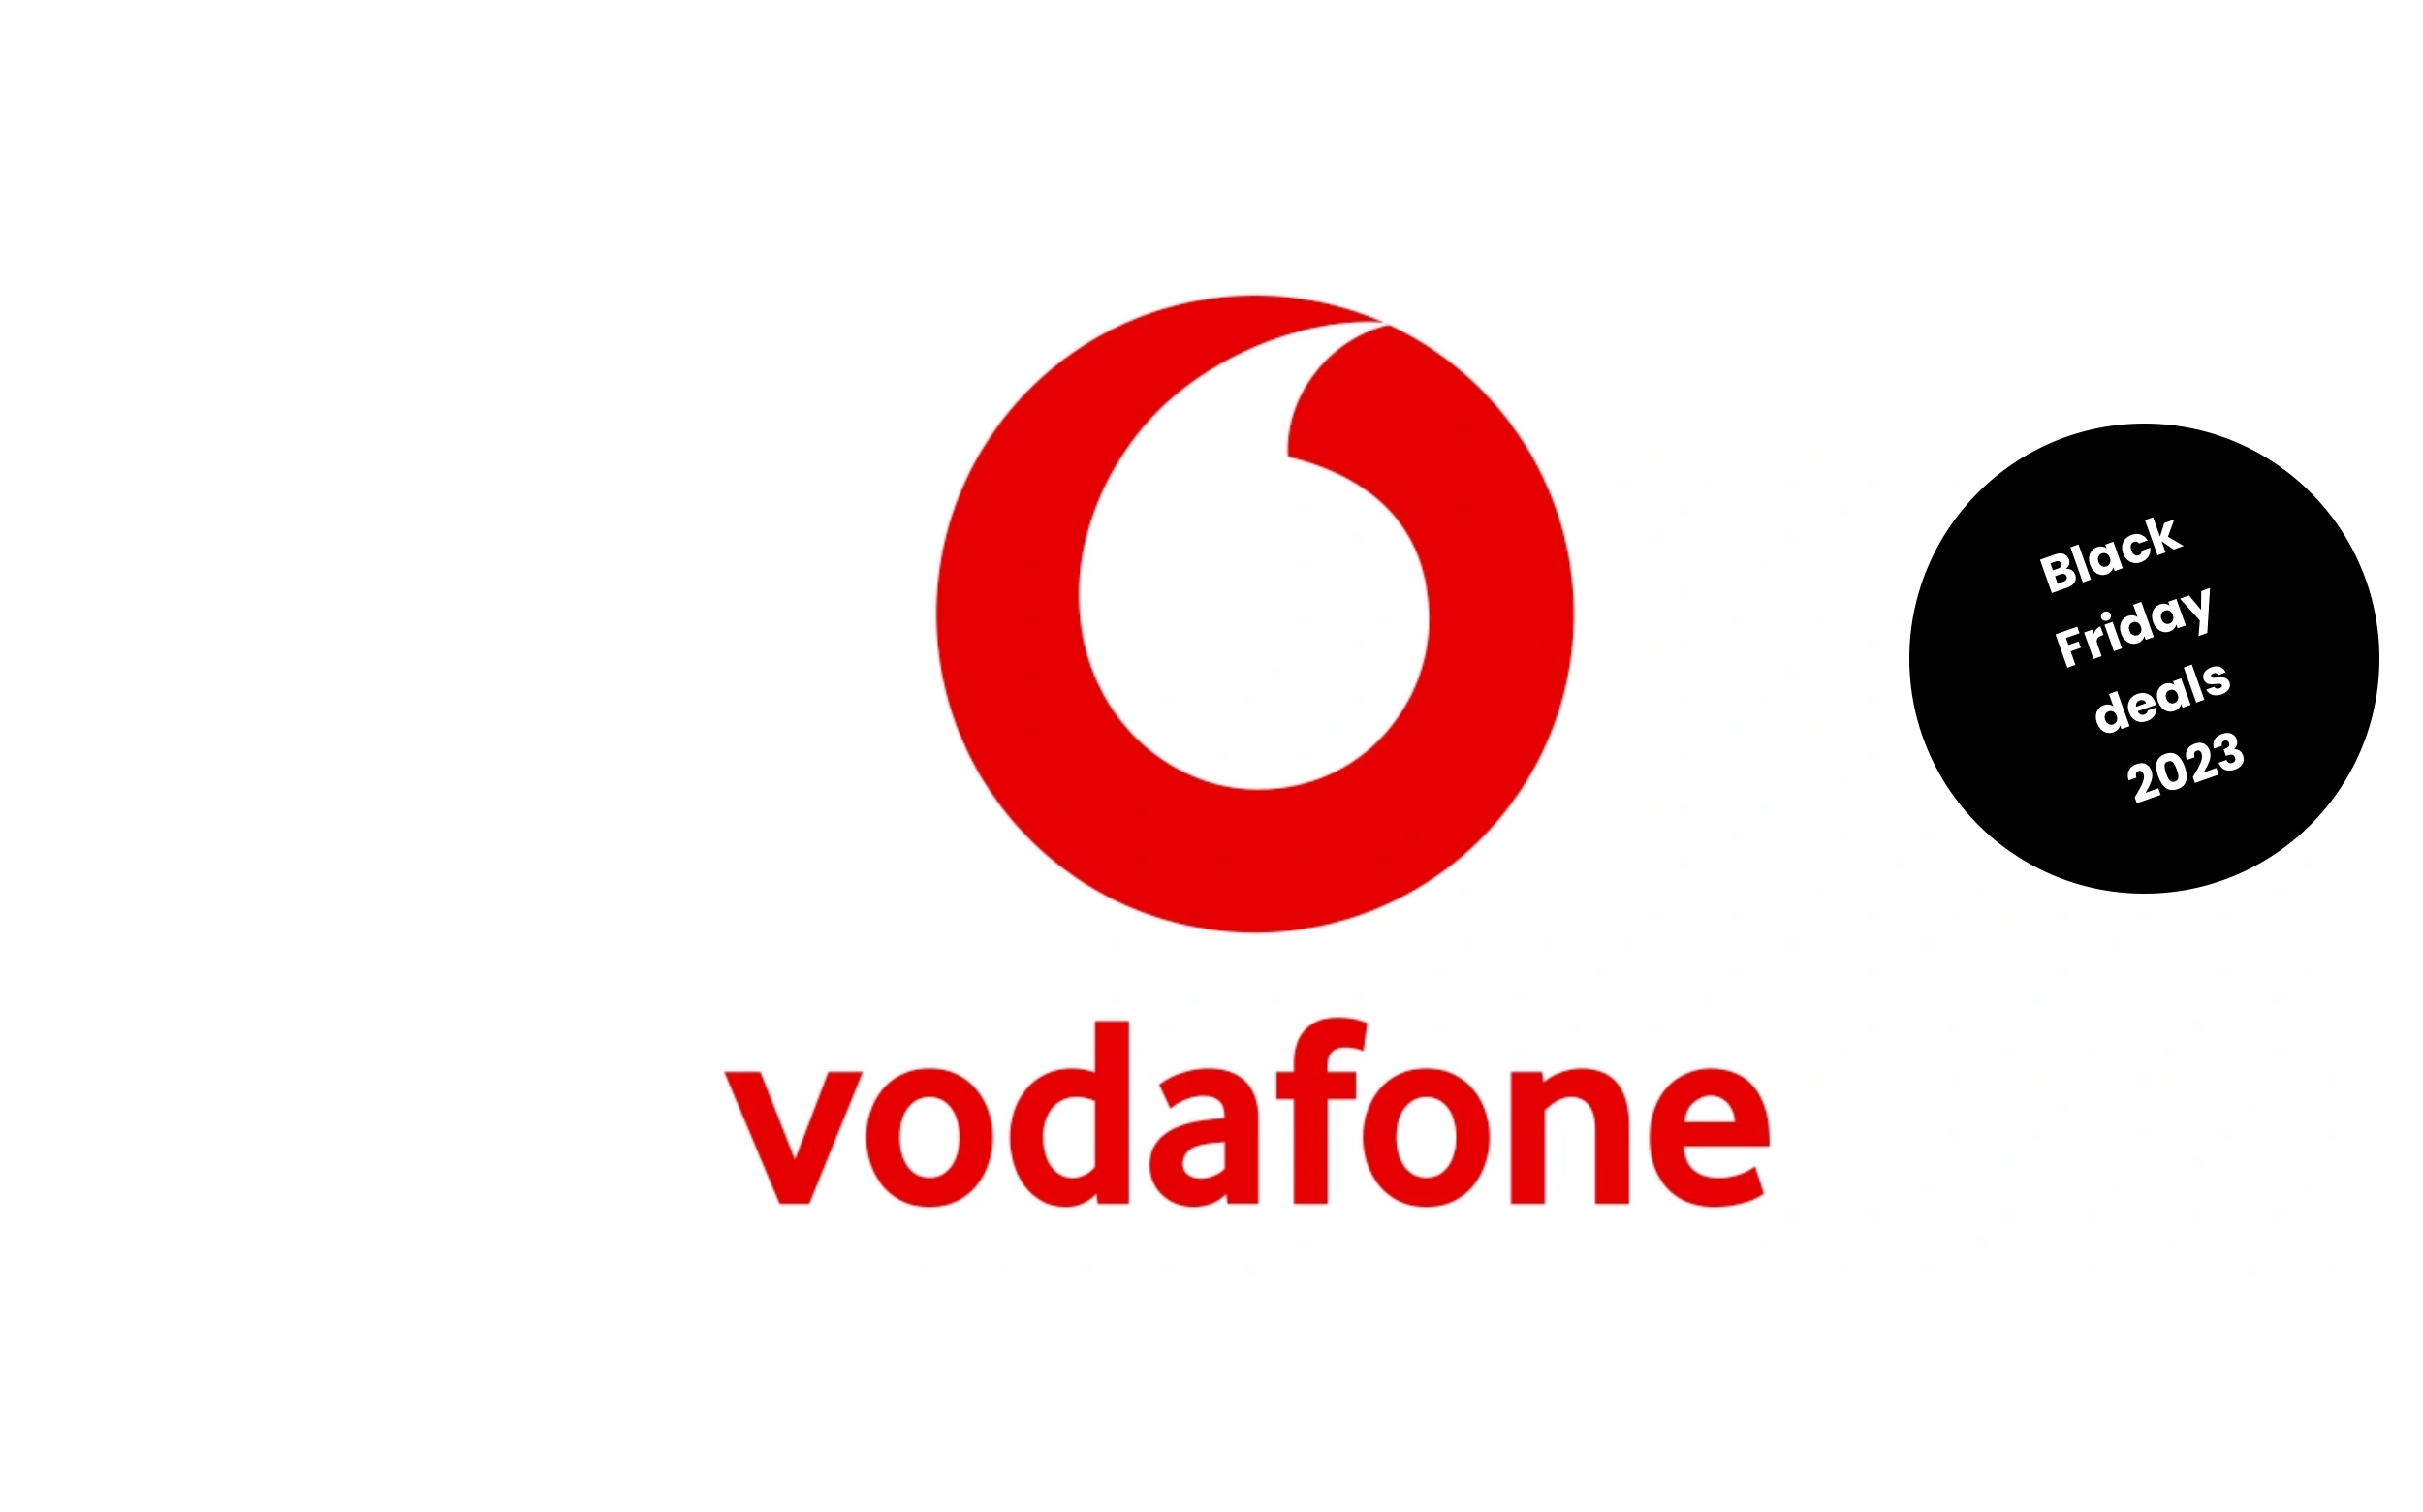 Vodafone Black Friday deals 2023